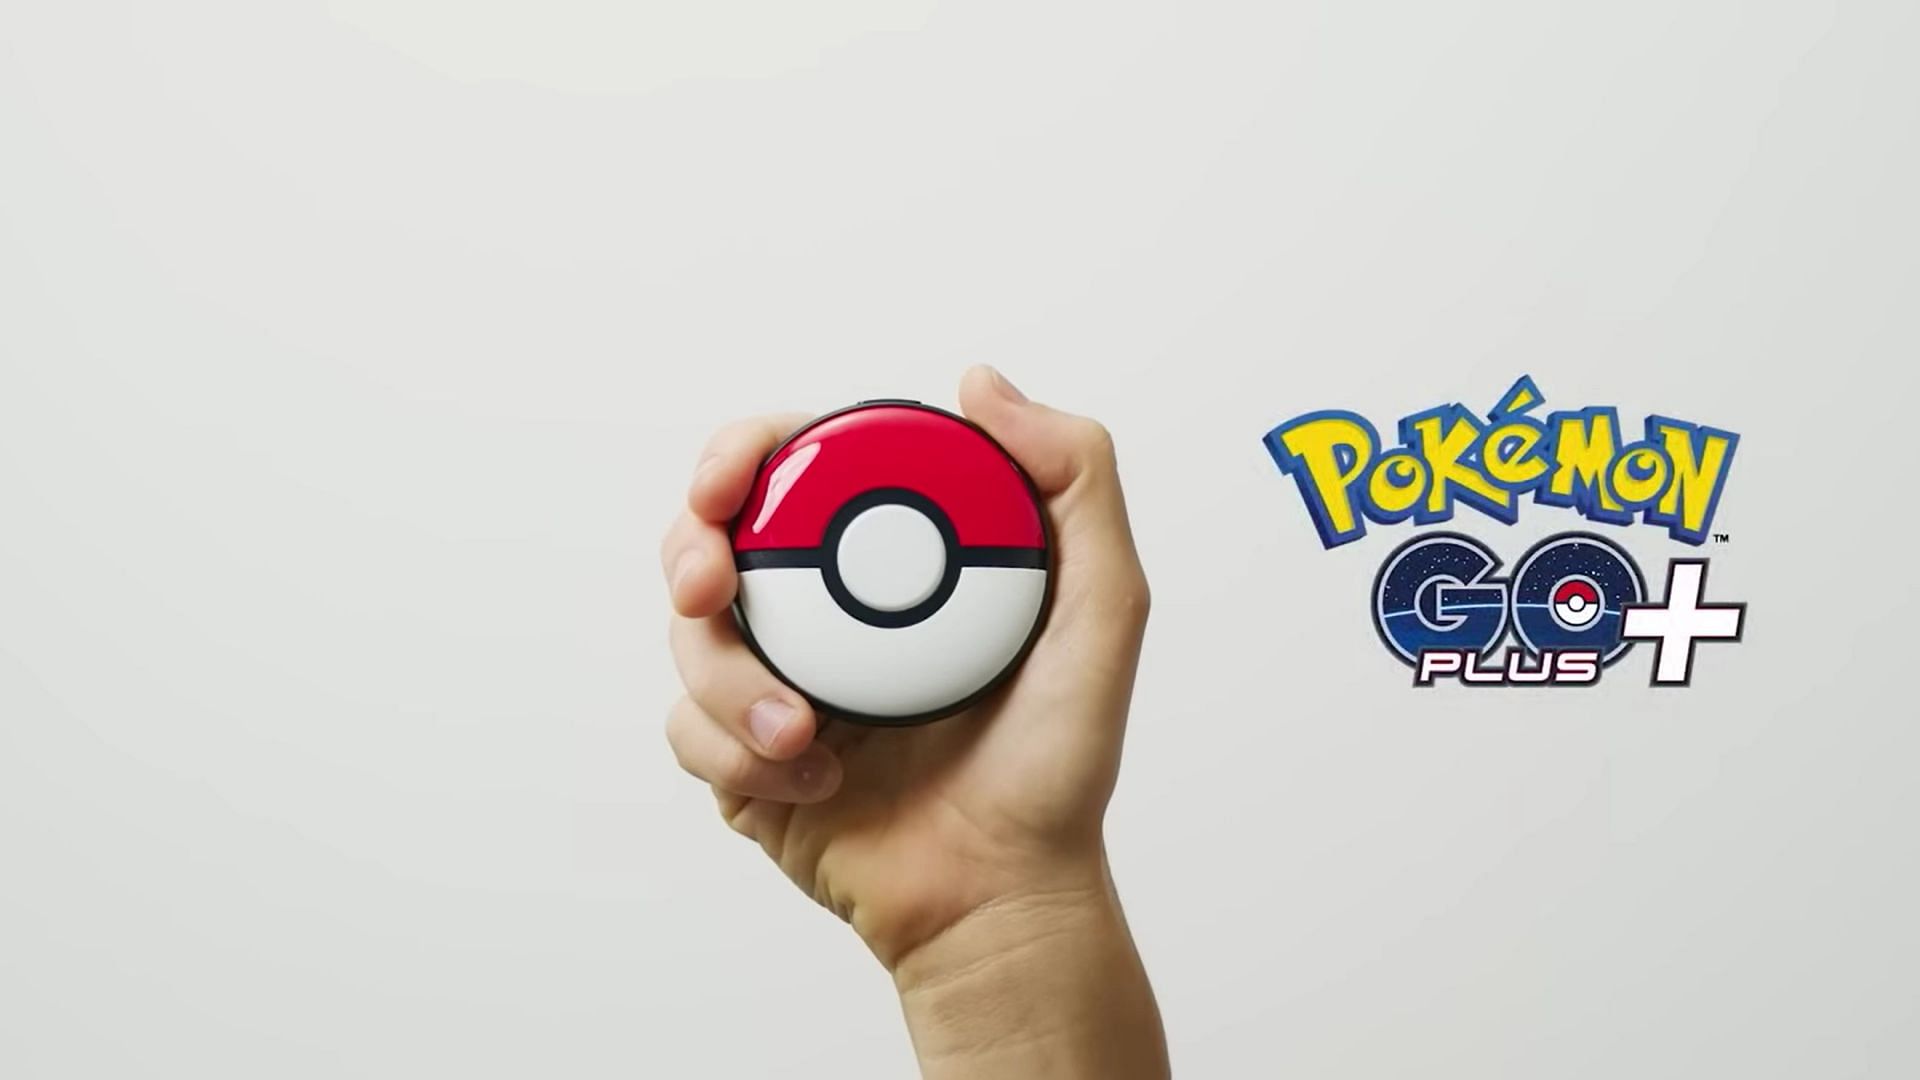 Official artwork for the Pokemon GO Plus + accessory (Image via The Pokemon Company)